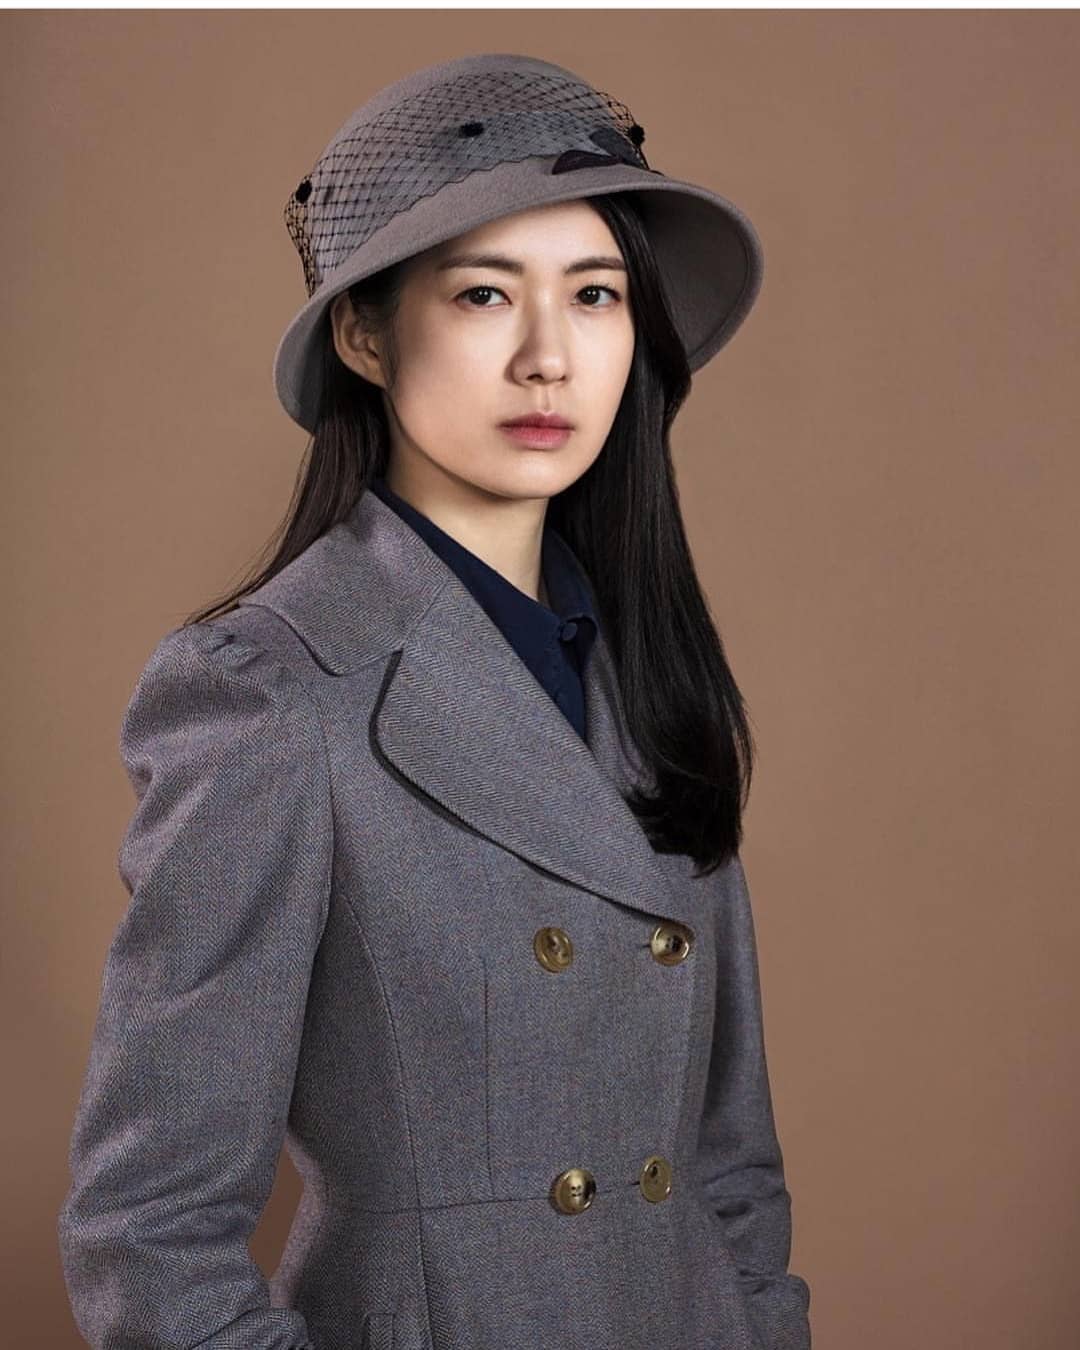 Deretan 20 Aktris Korea yang Dilabeli Cantik sepanjang Masa